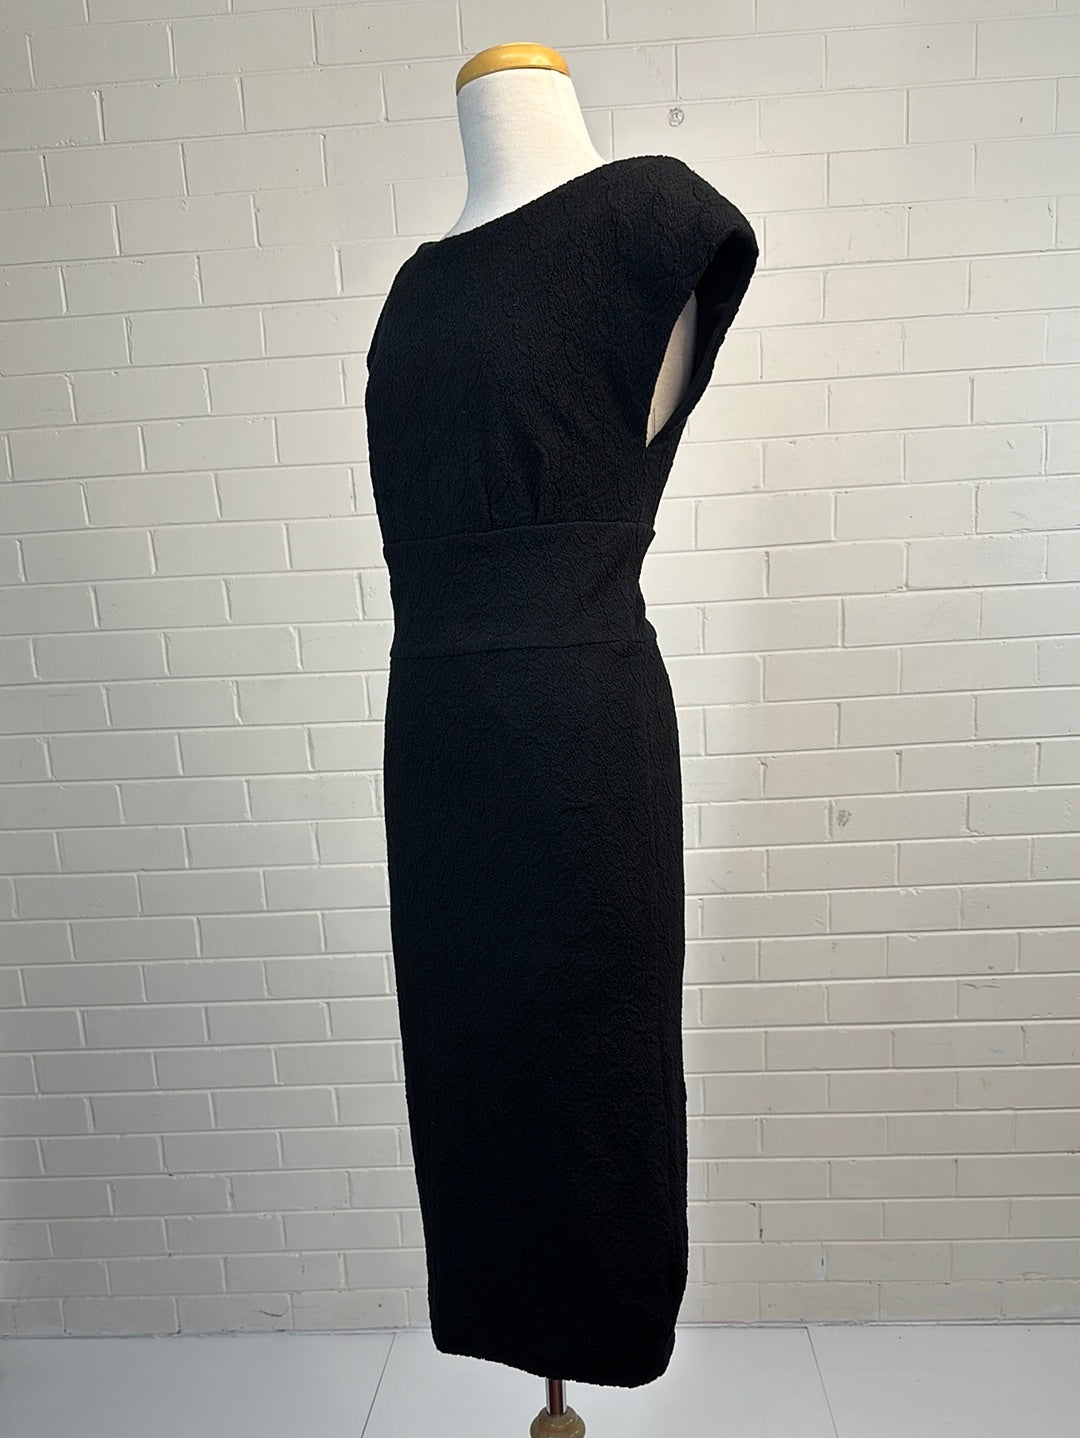 George | vintage 90's | dress | size 12 | midi length | made in Australia